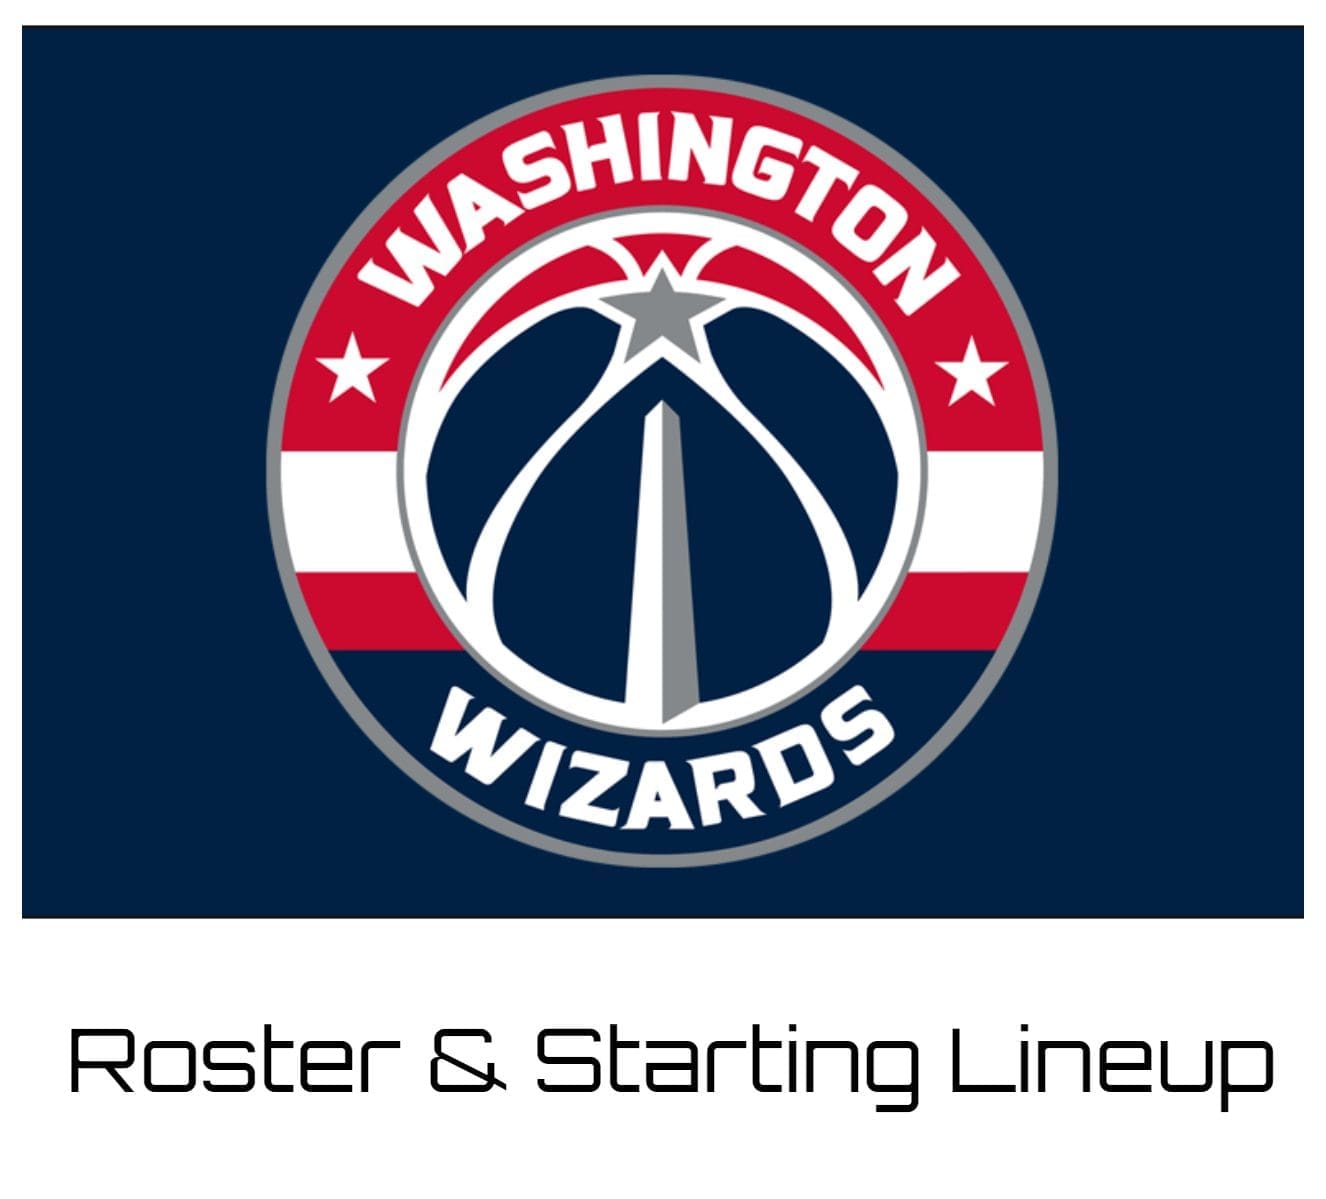 Washington Wizards Roster